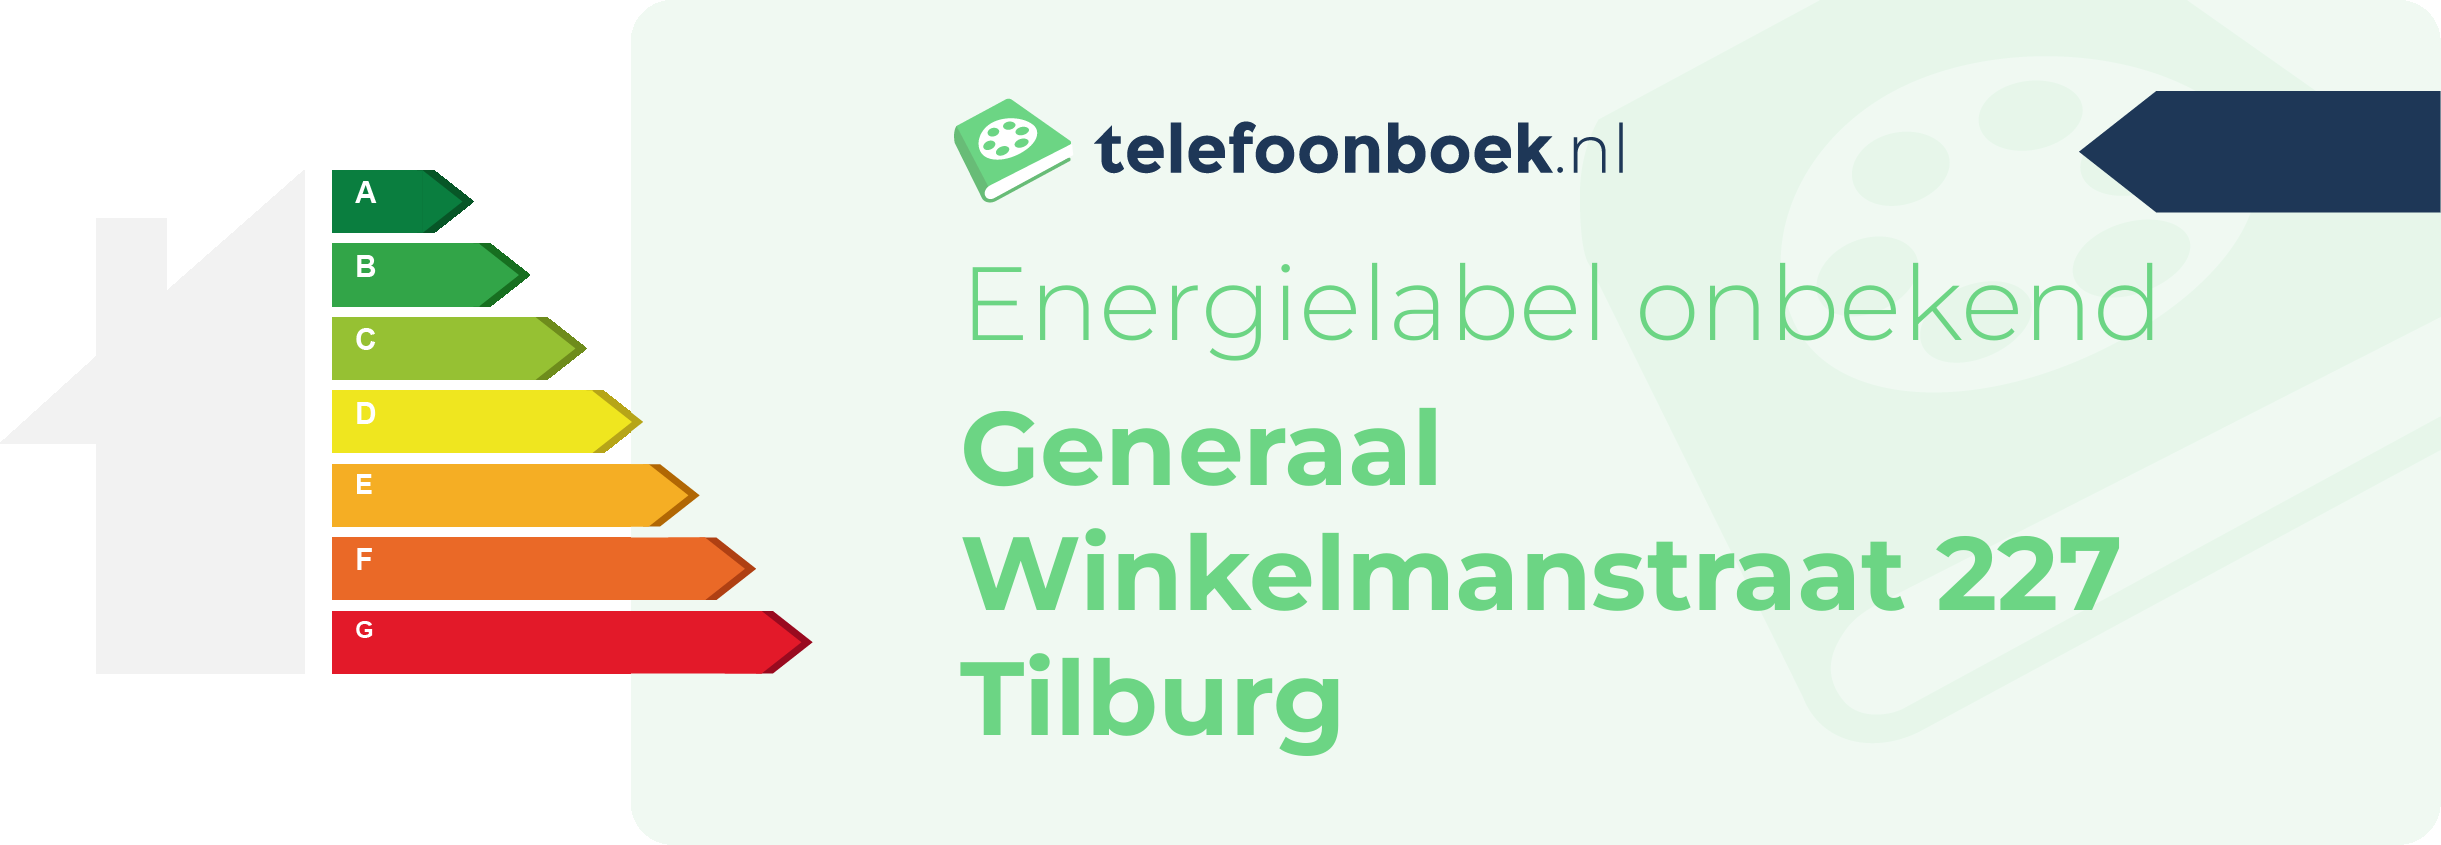 Energielabel Generaal Winkelmanstraat 227 Tilburg